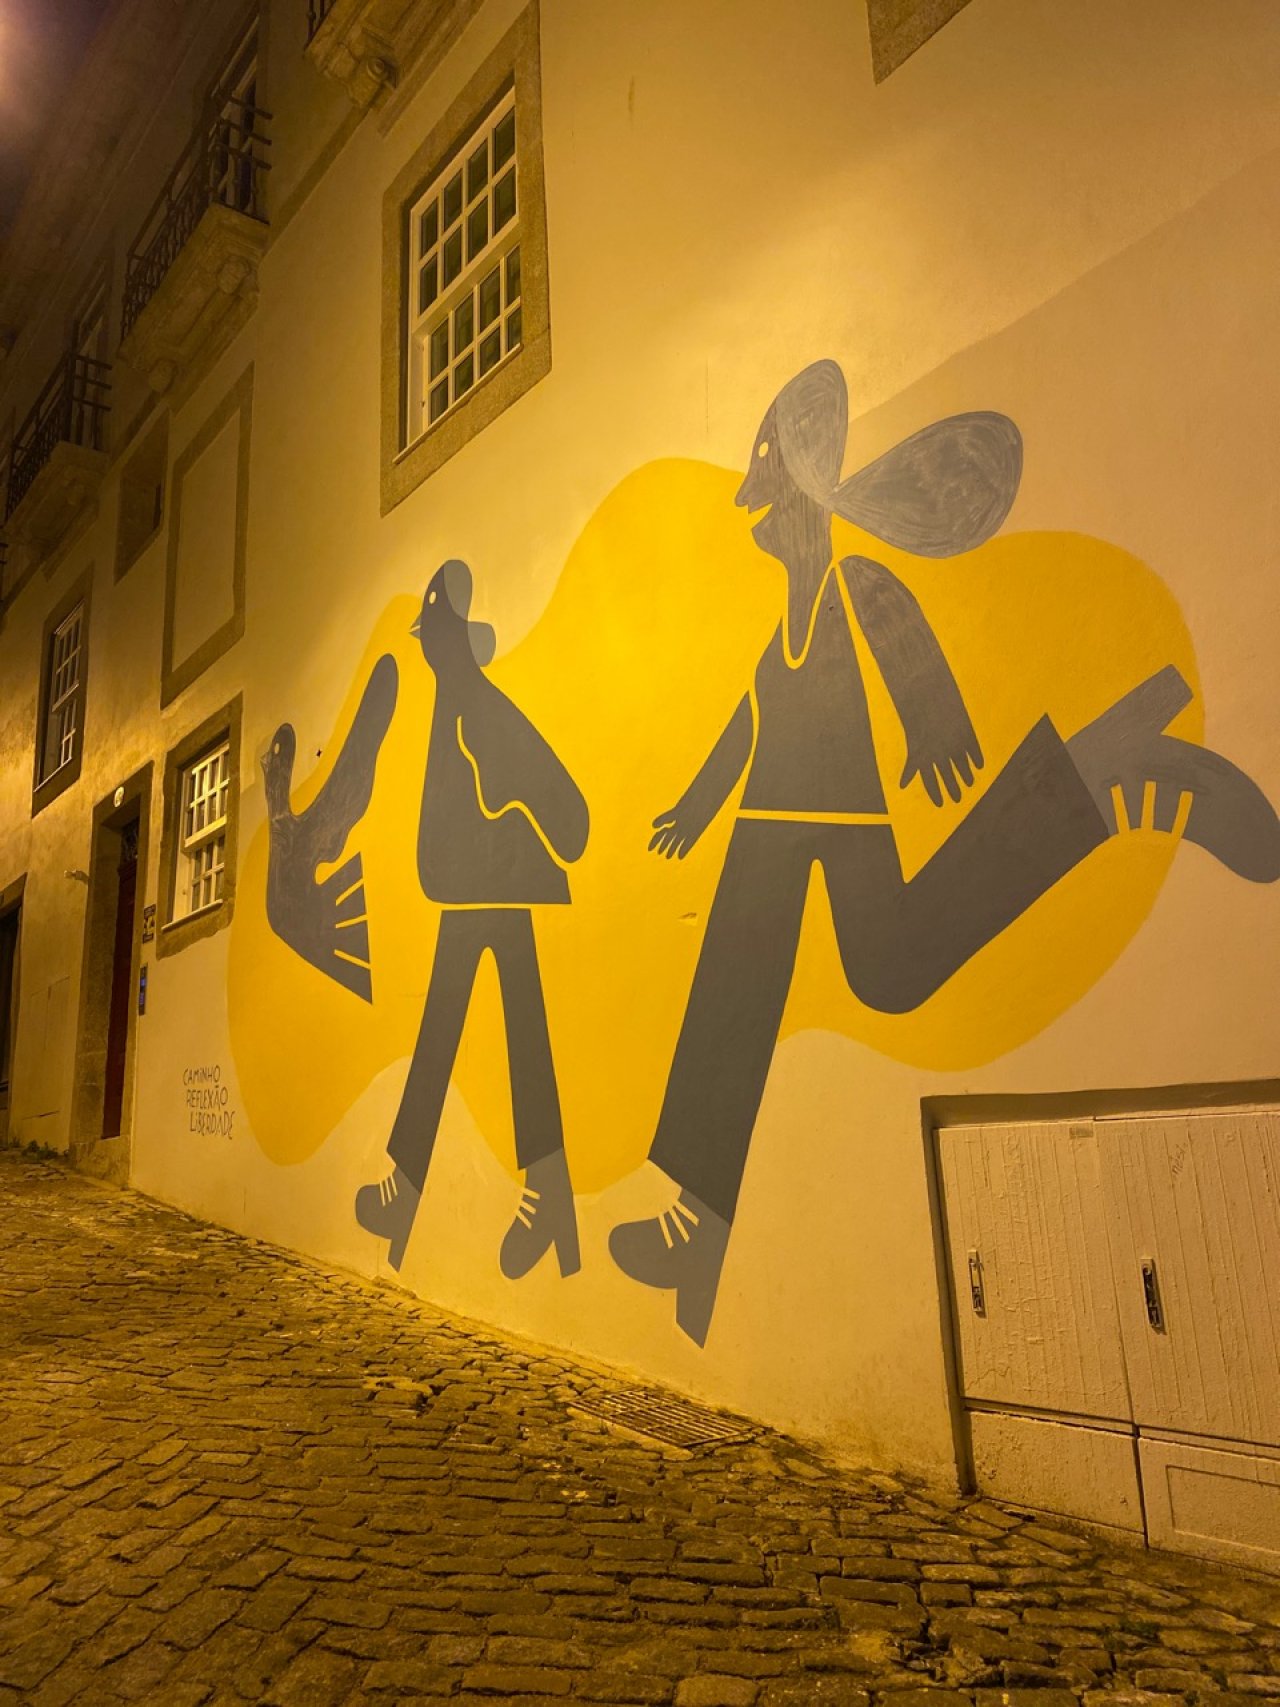 StreetArt in ArtSpots App spotted by Adina Ghetu-Matei on 29.12.2020